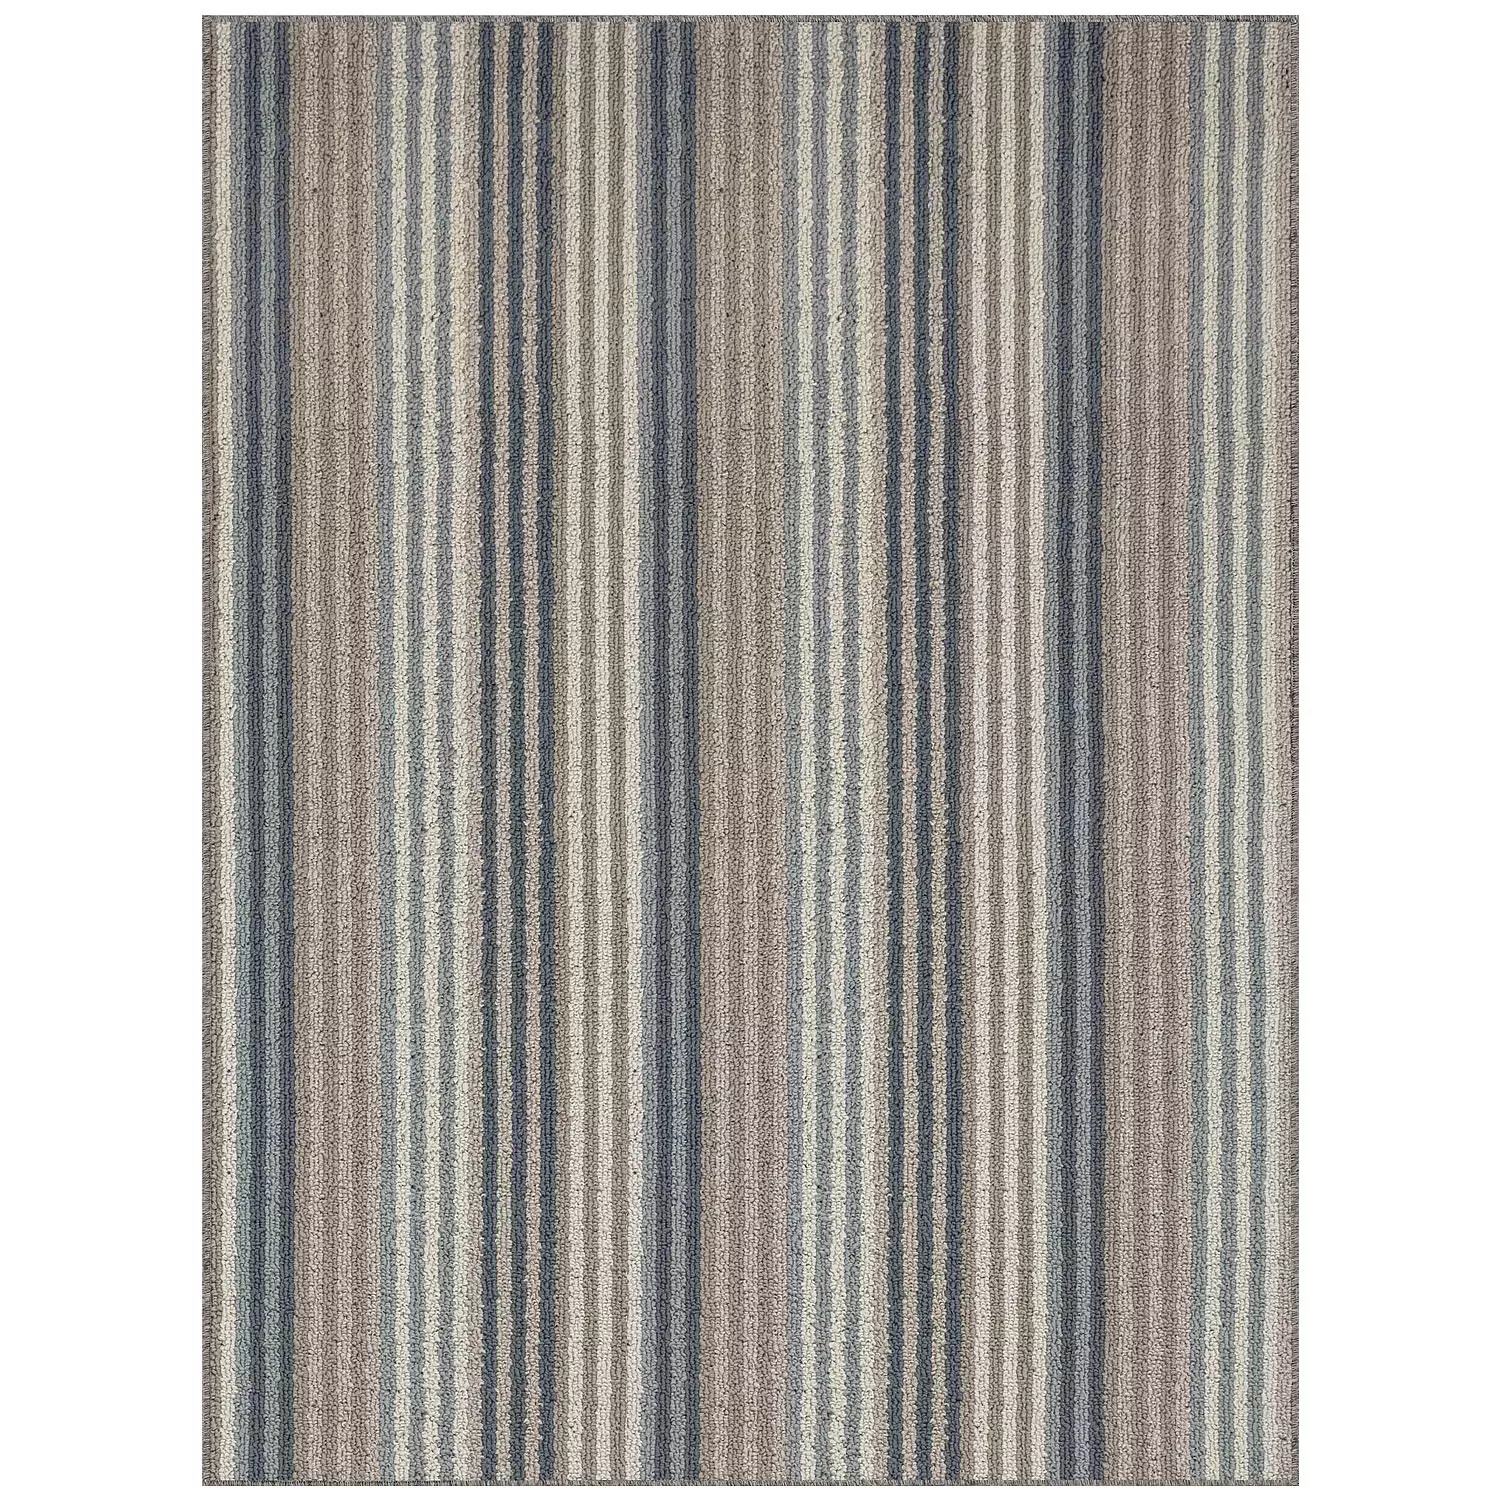 NEWPORT Collection - Loon rug, 3'x4'